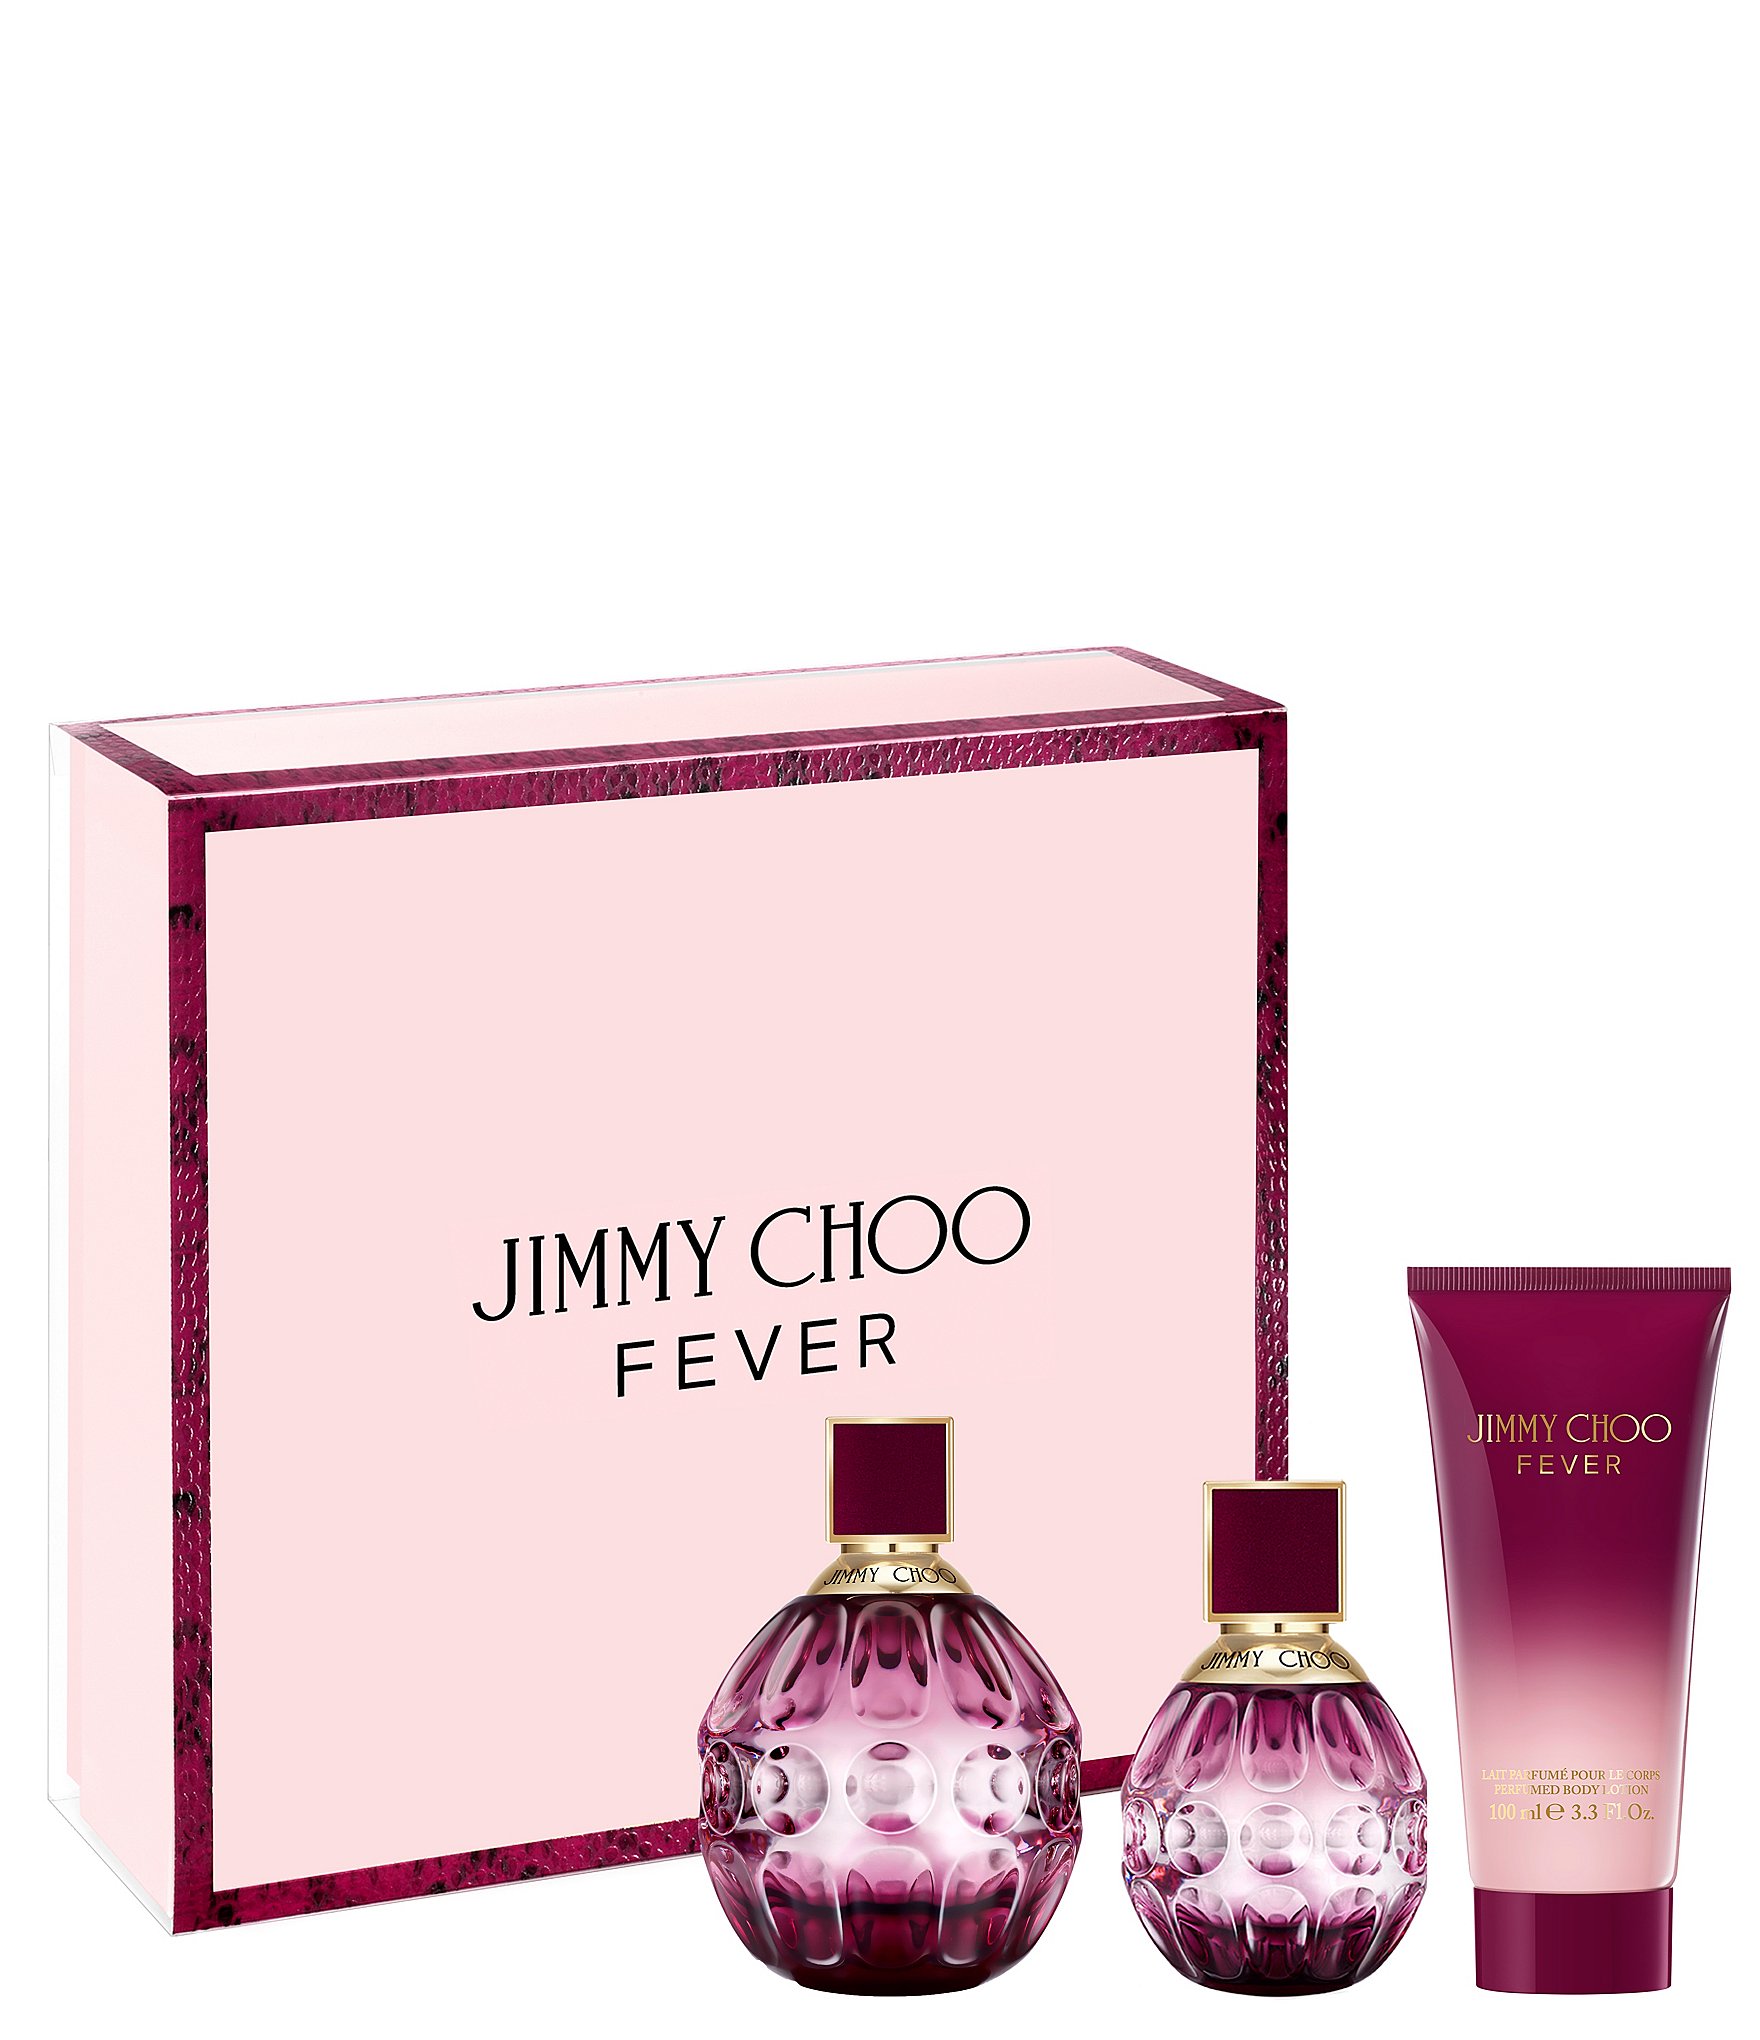 jimmy choo fever perfume notes